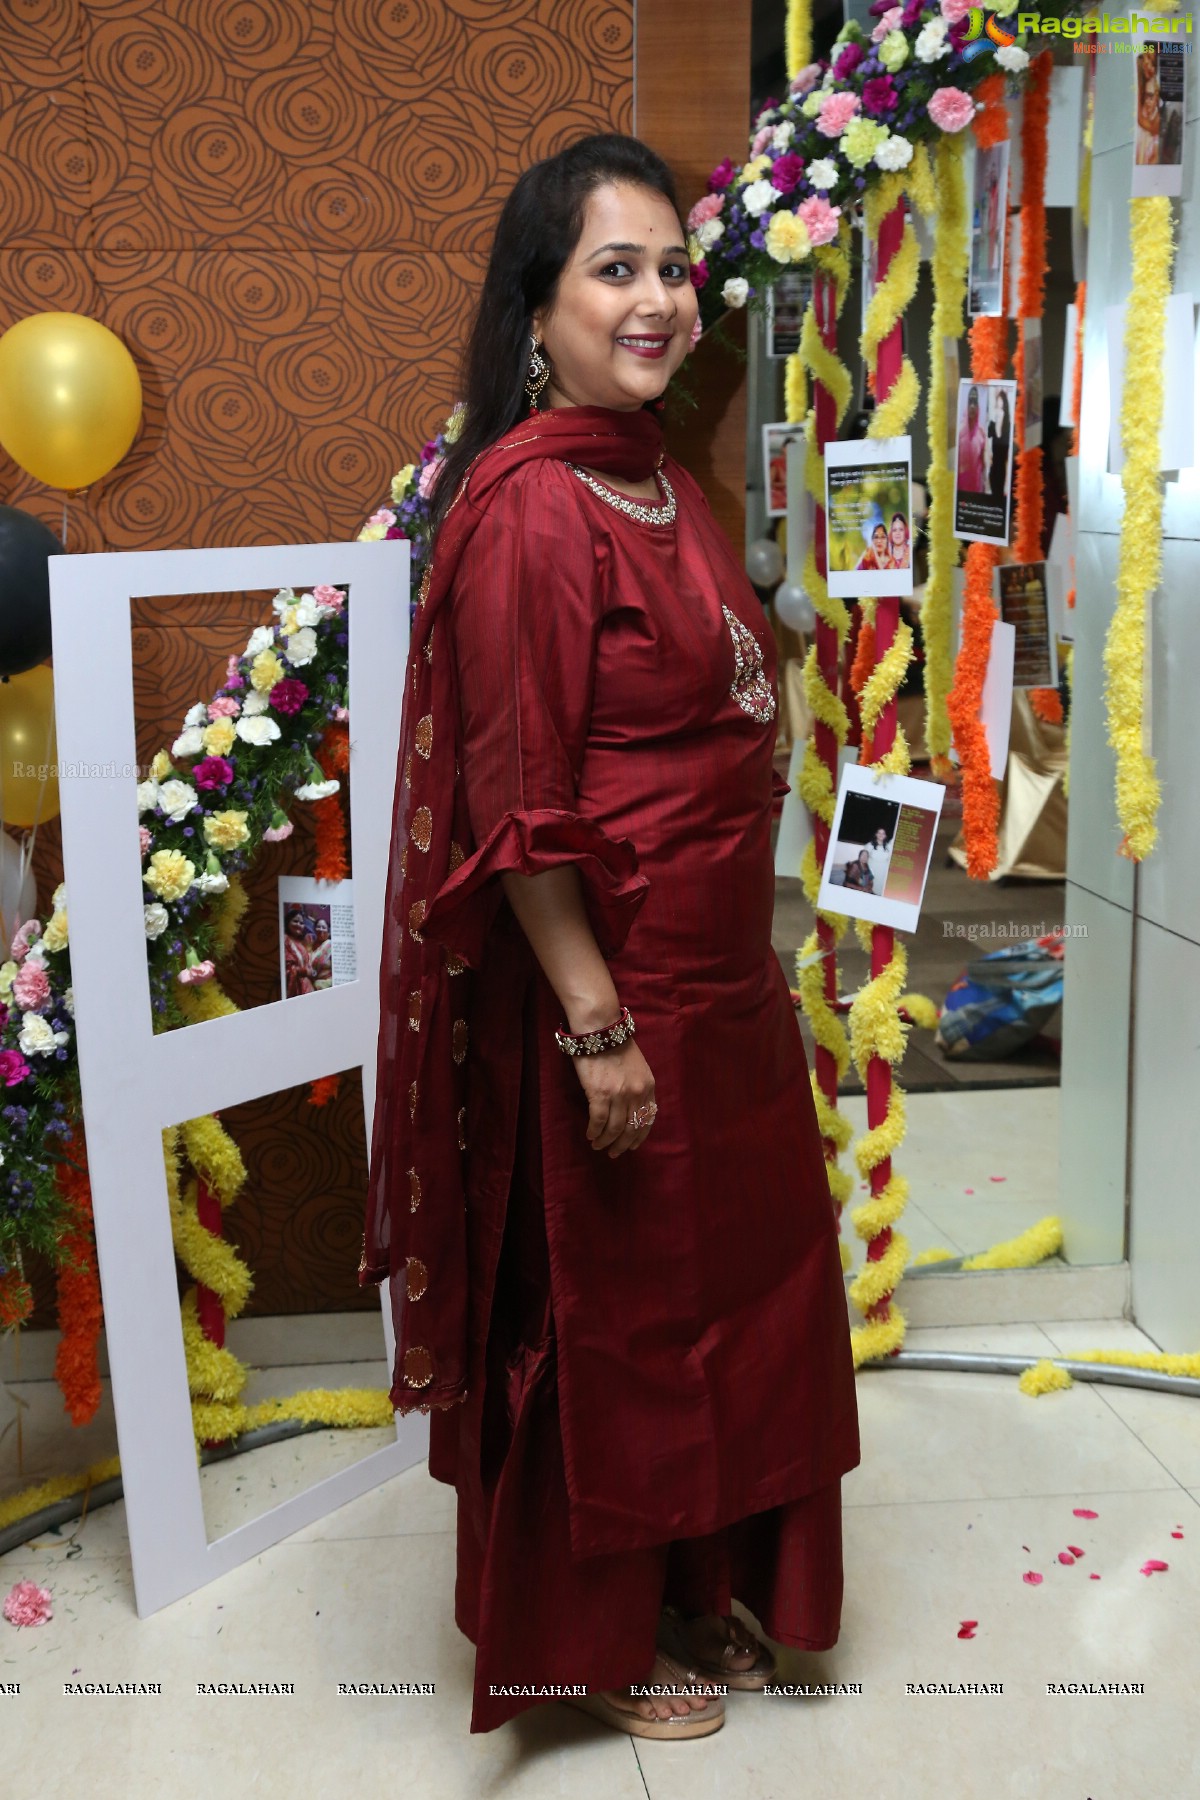 Samanvay Ladies Club Event @ Hotel Residency, Nampally in Hyderabad